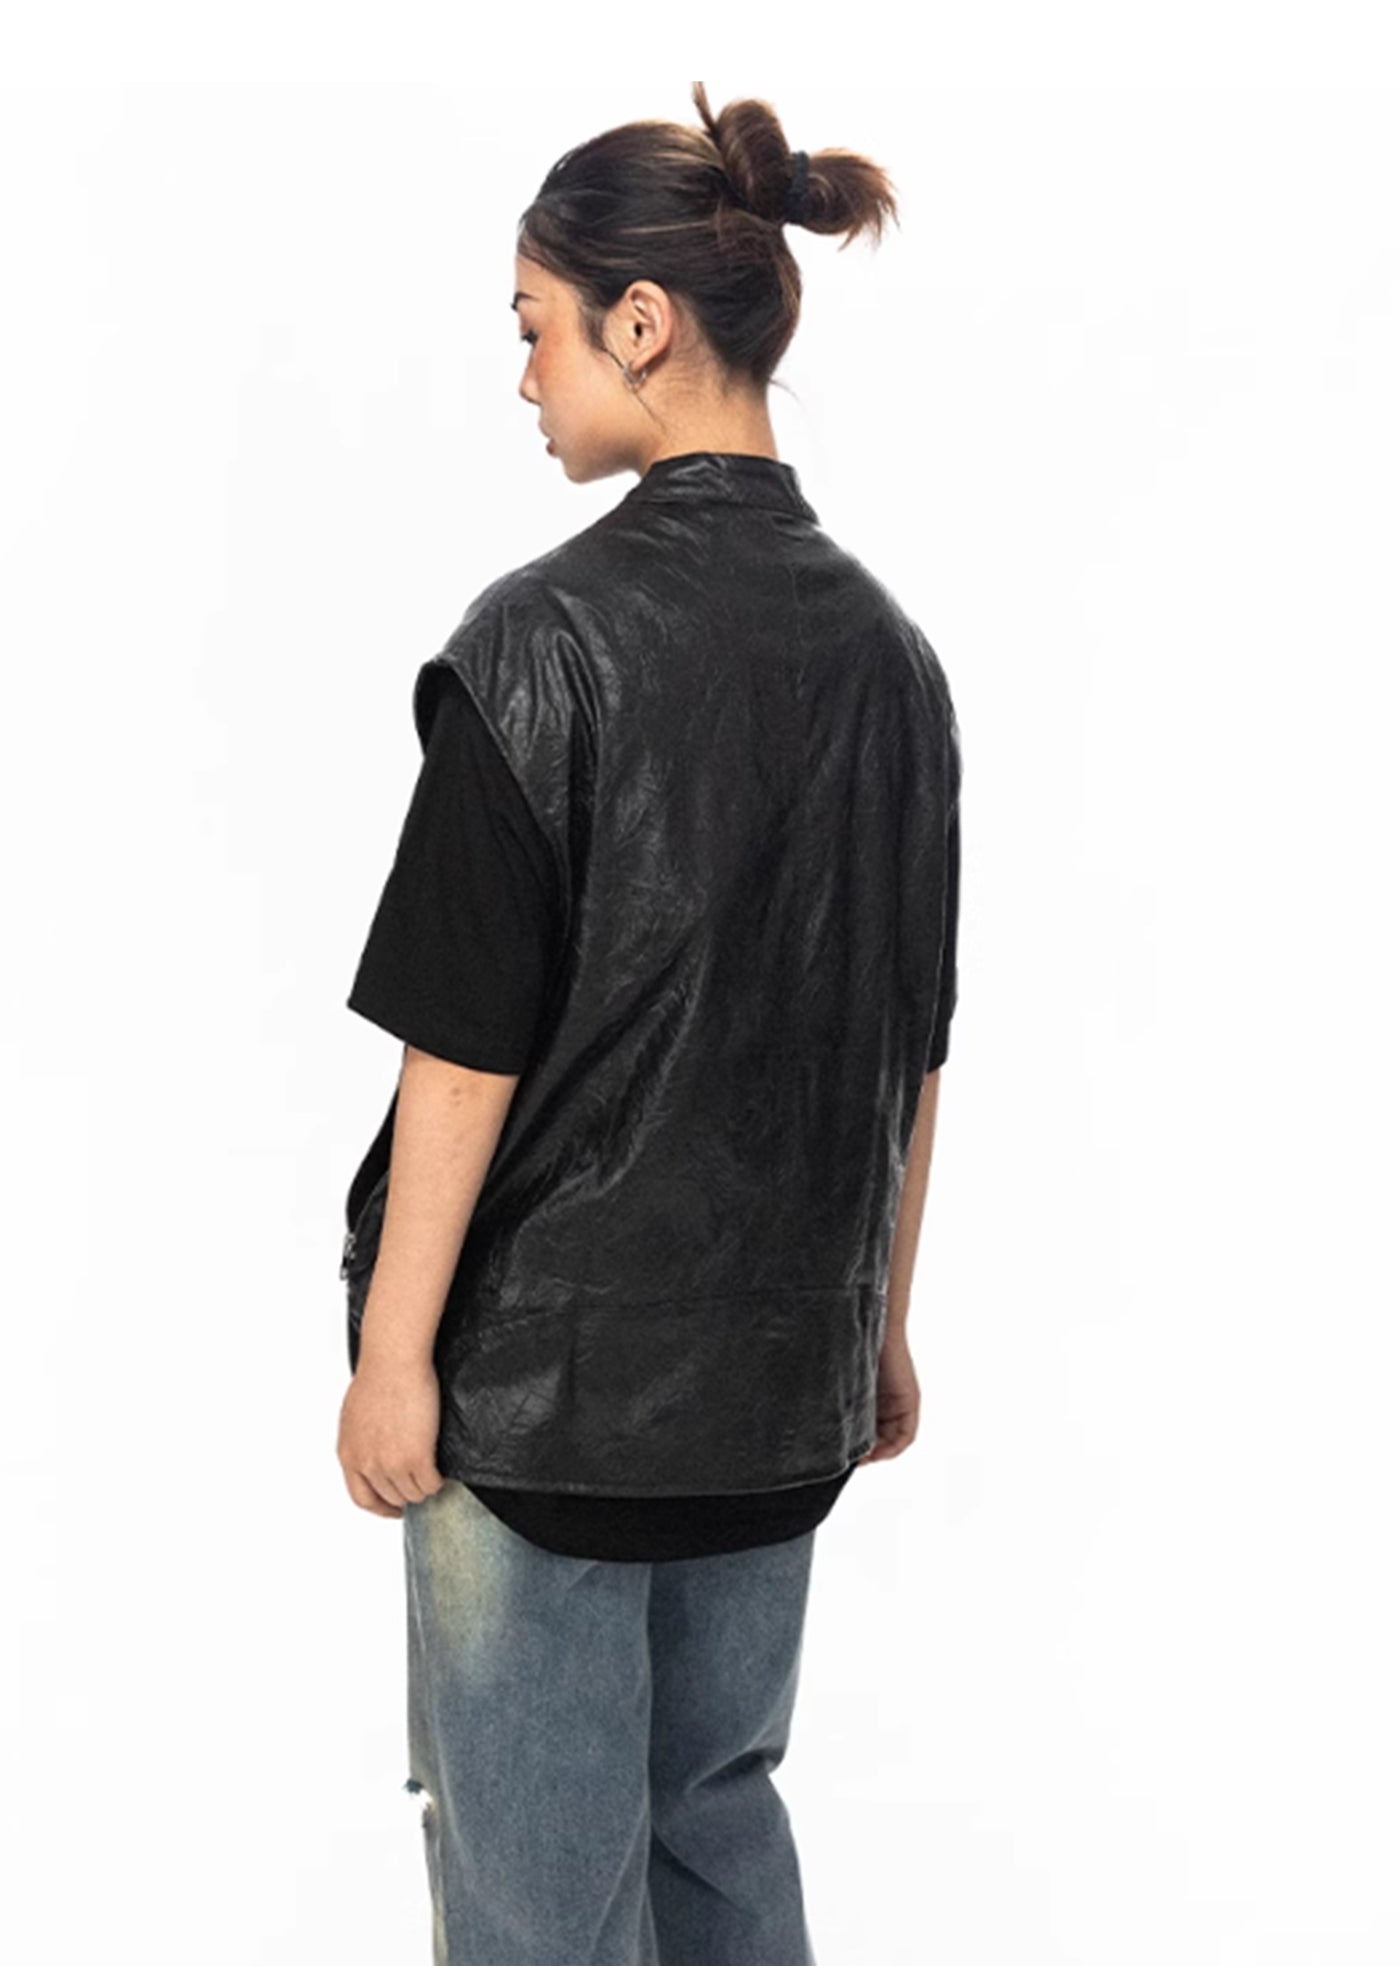 【BLACK BB】Black leather textured shiny flix vest  BK0020